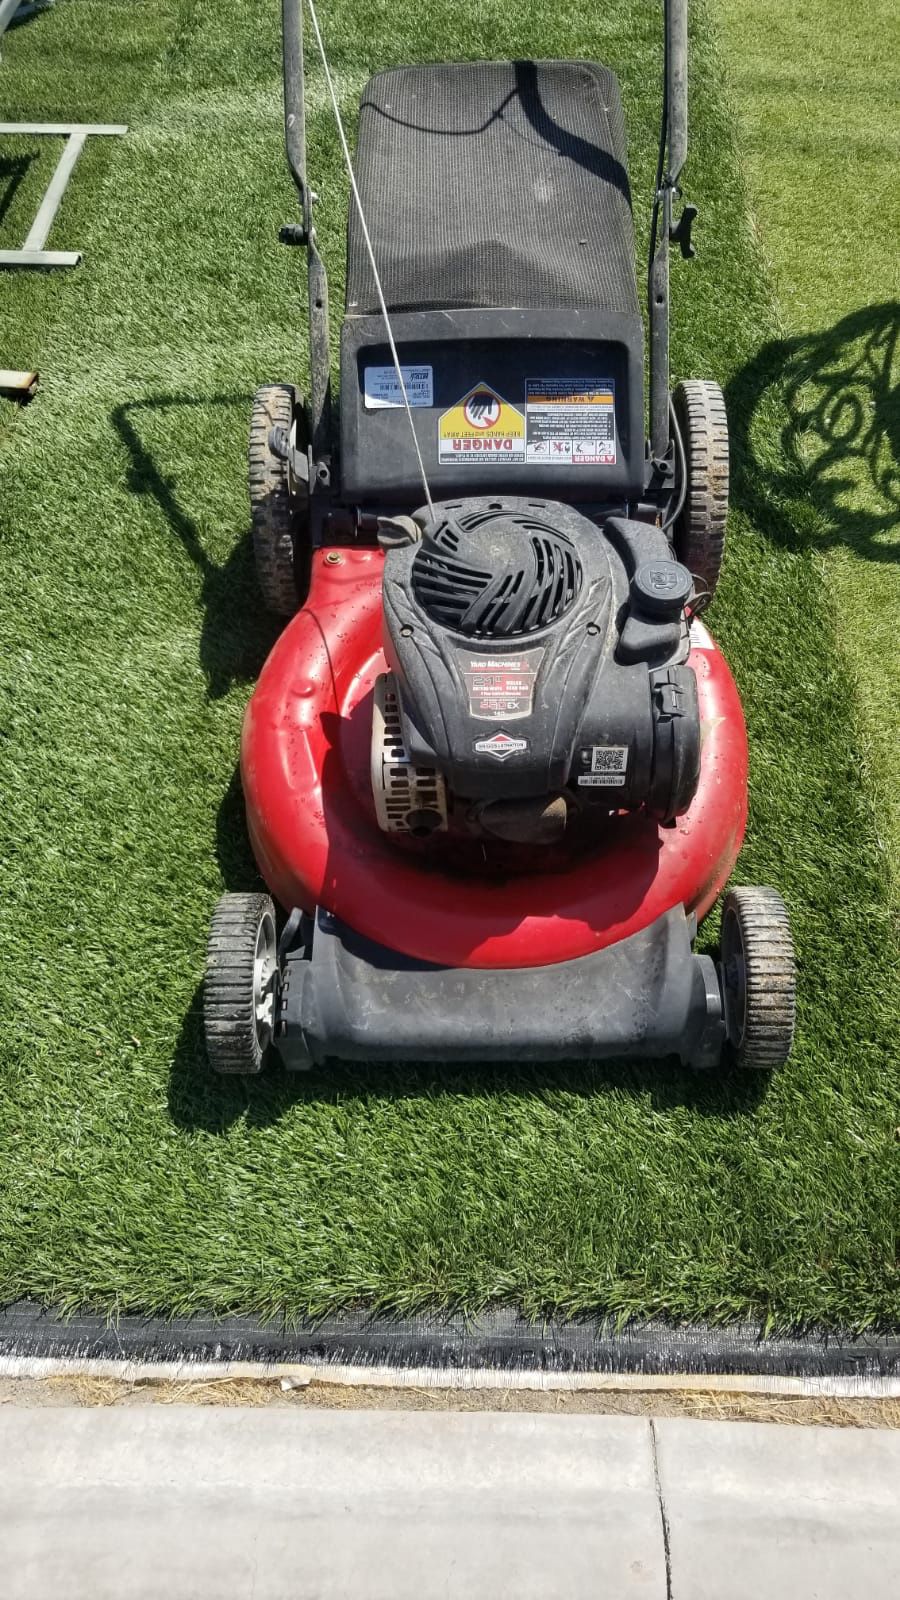 Patio Push lawn mower